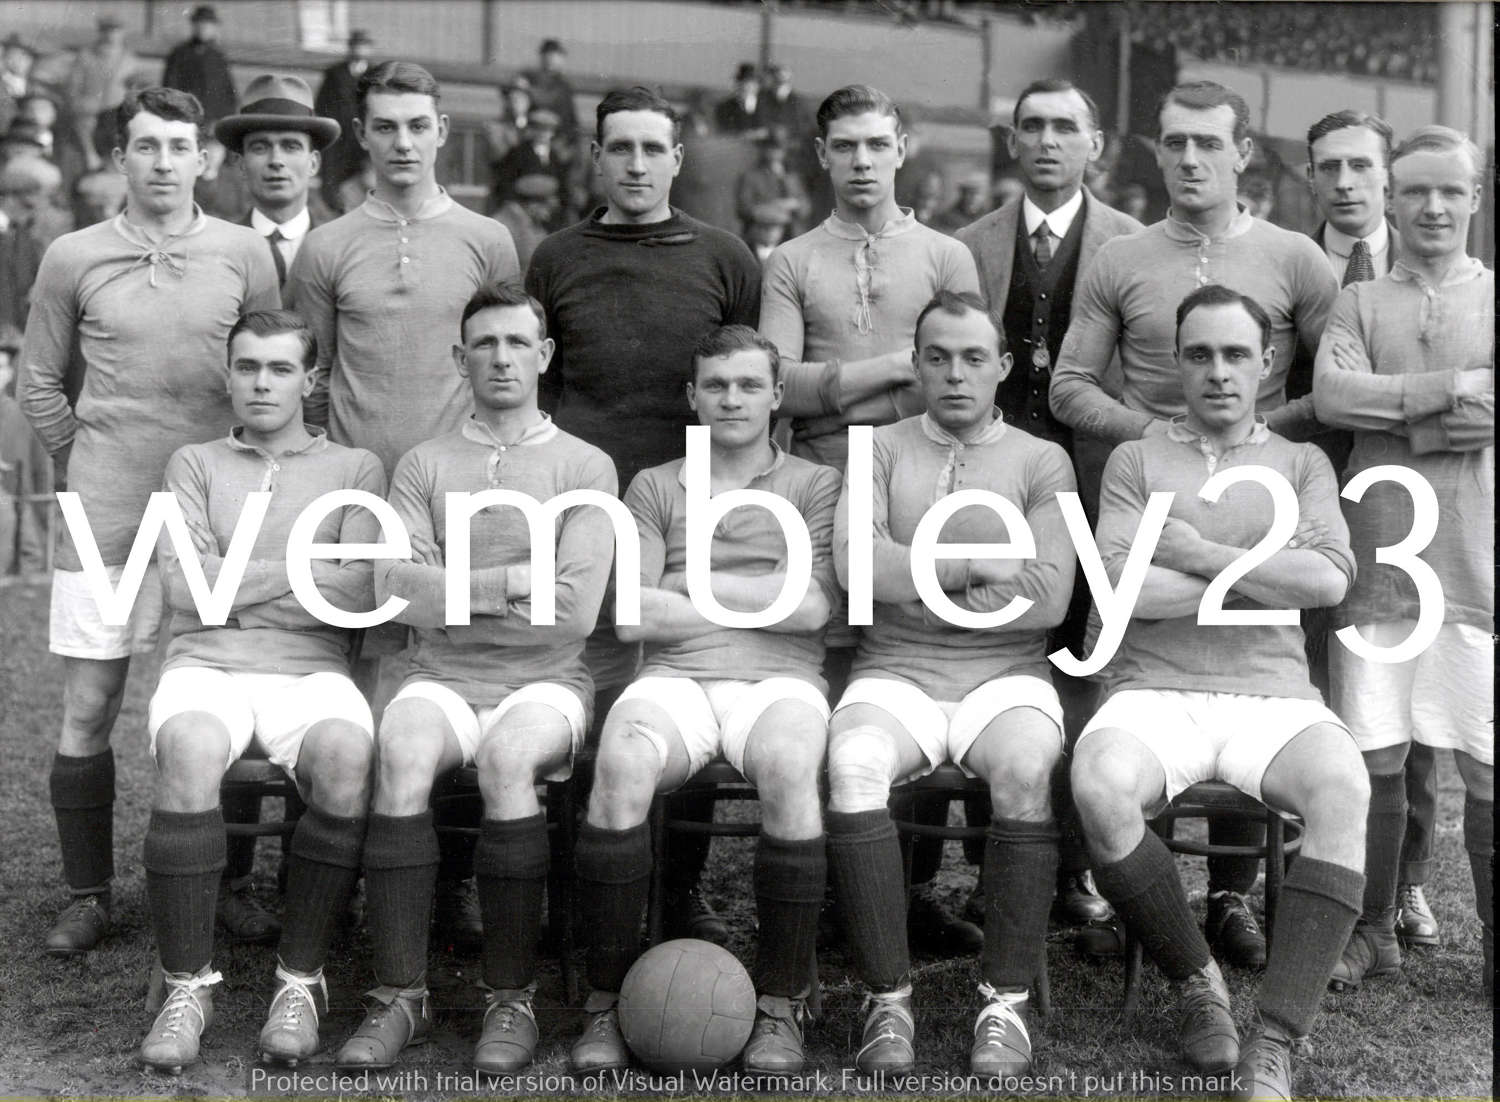 Albert Wilkes reprint Manchester United 1919-20 team